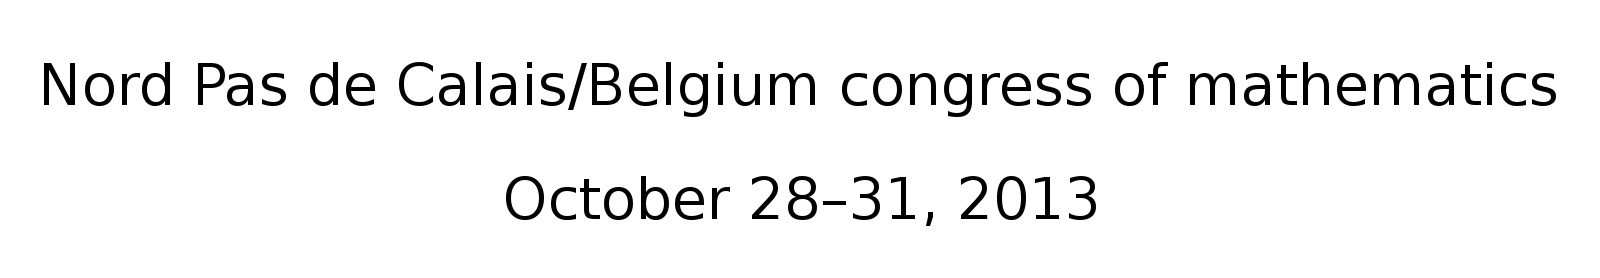 Congrès de Mathématique Nord-Pas de Calais/Belgique,
		  28–31 octobre 2013